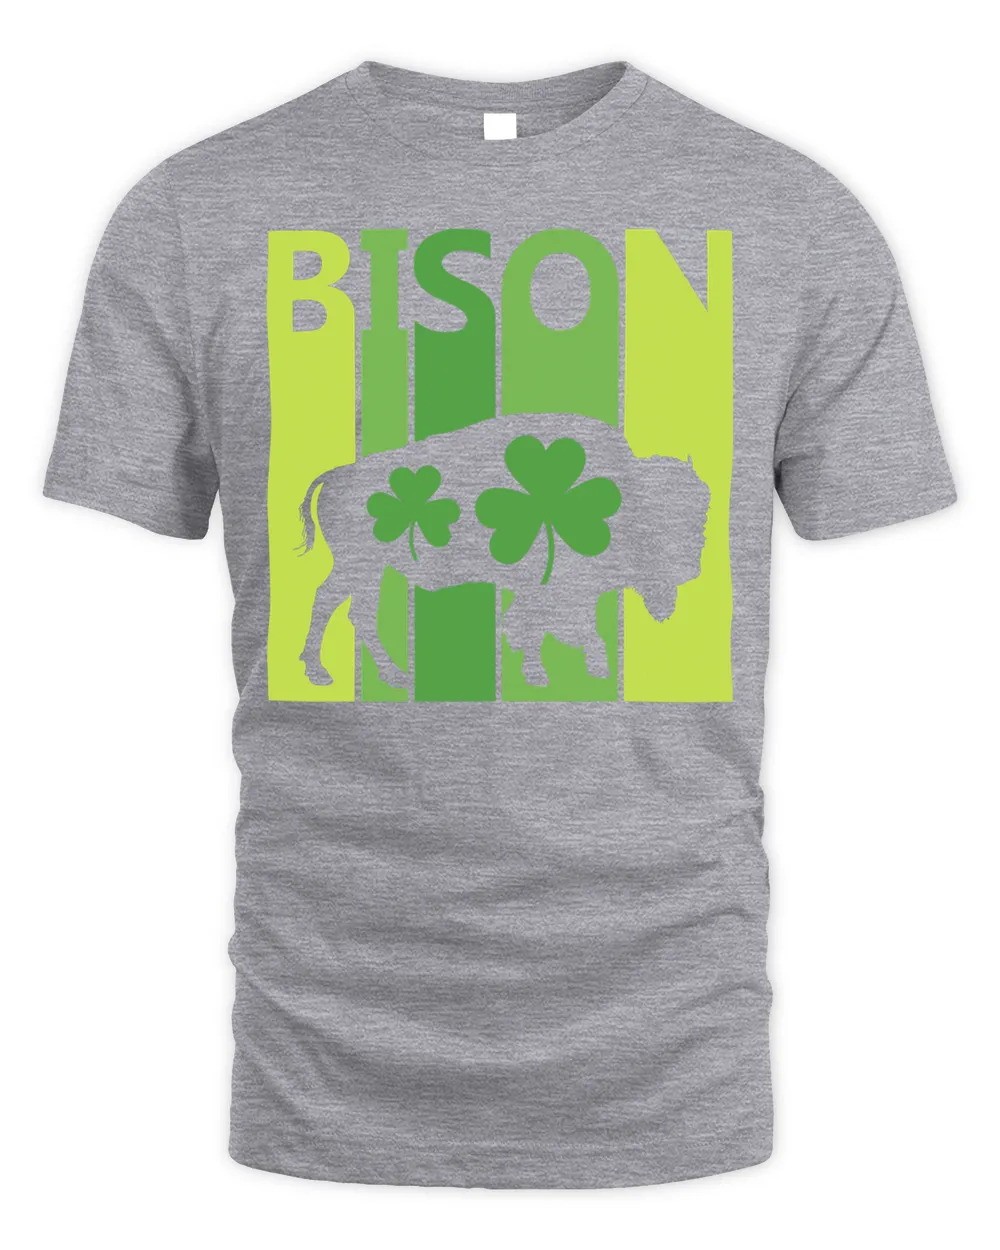 Lucky Bison St Patrick's Day T-Shirt Irish Gift